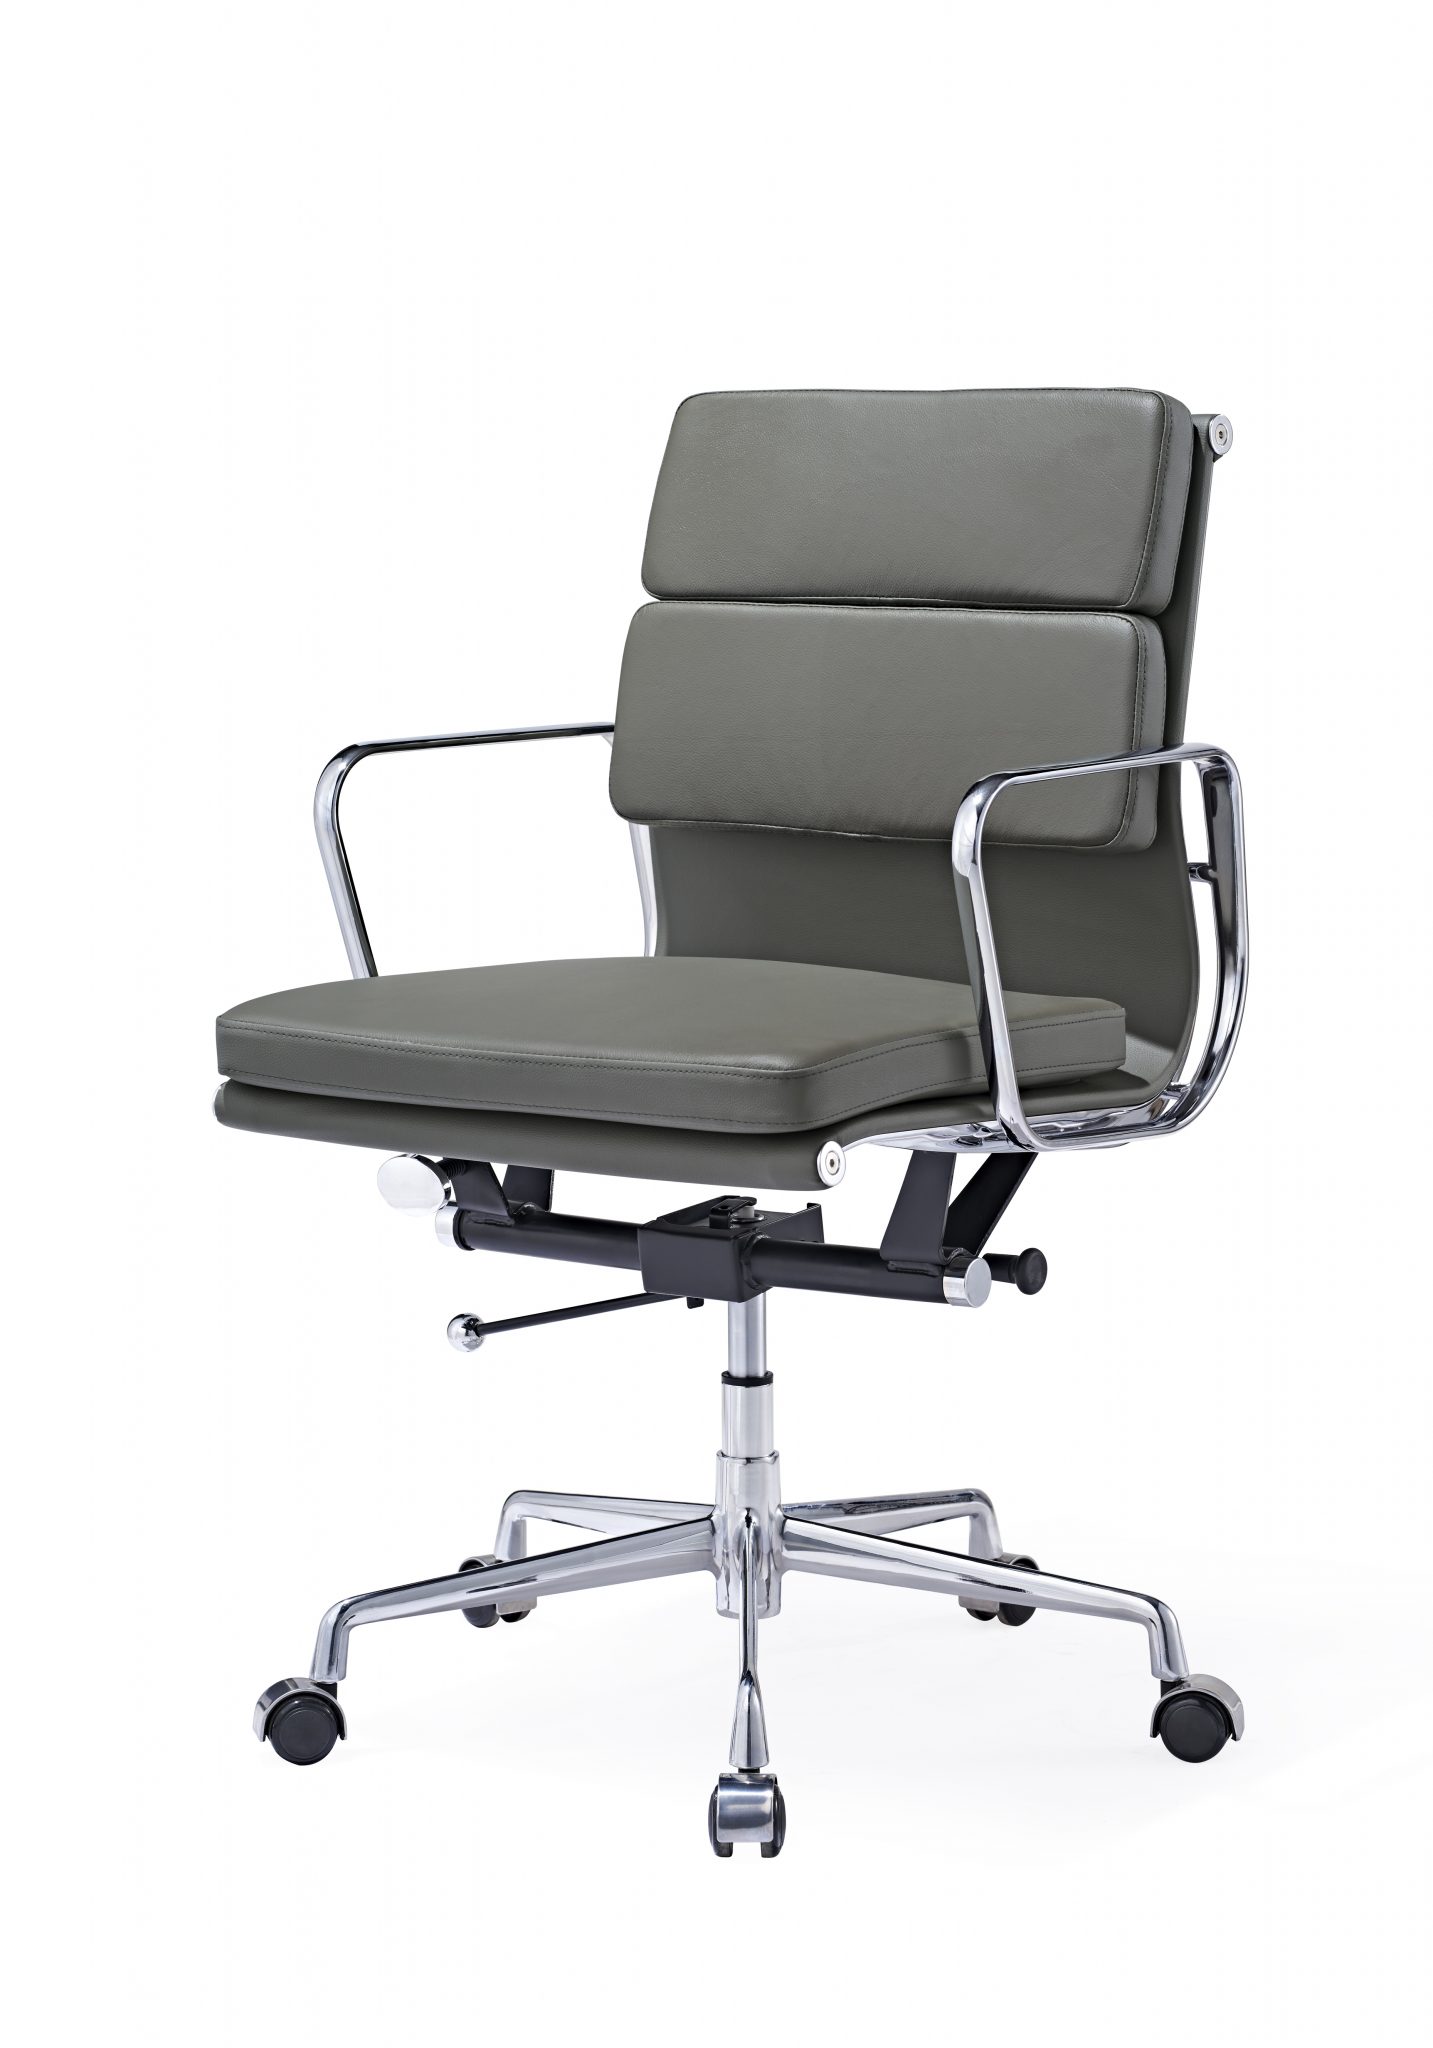 Eames LCW Chair Replica – Ashwood By Decomica